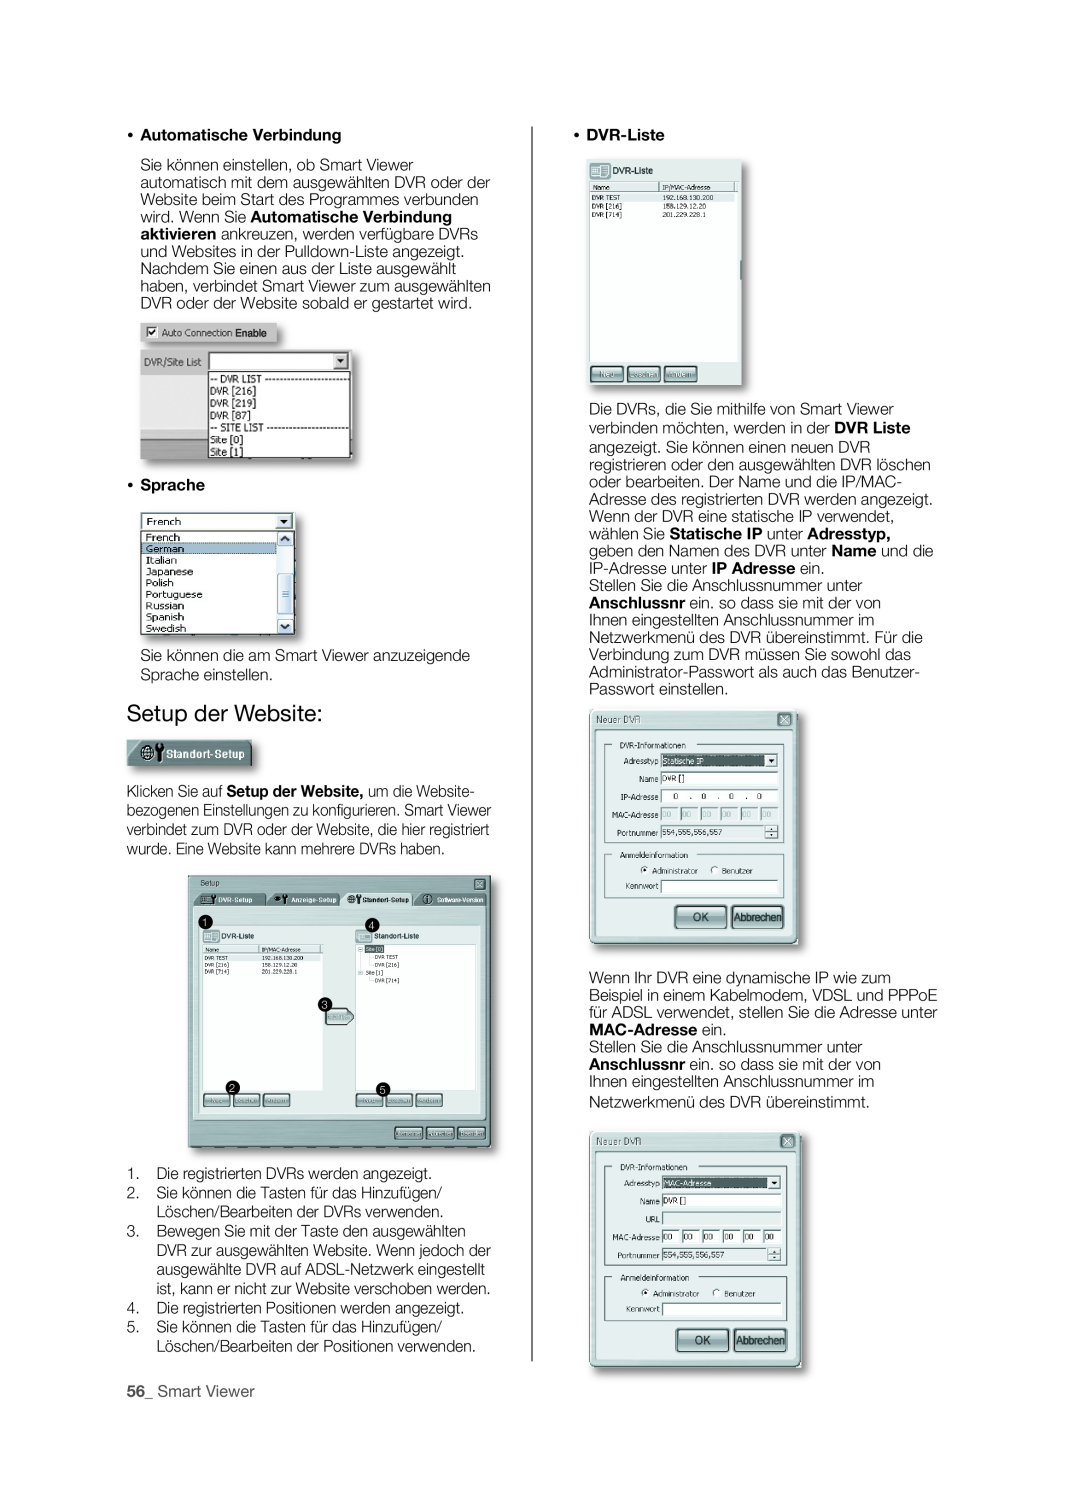 Samsung SHR-5082P/XEG, SHR-5160P manual Setup der Website,  Automatische Verbindung,  Sprache, Smart Viewer,  DVR-Liste 